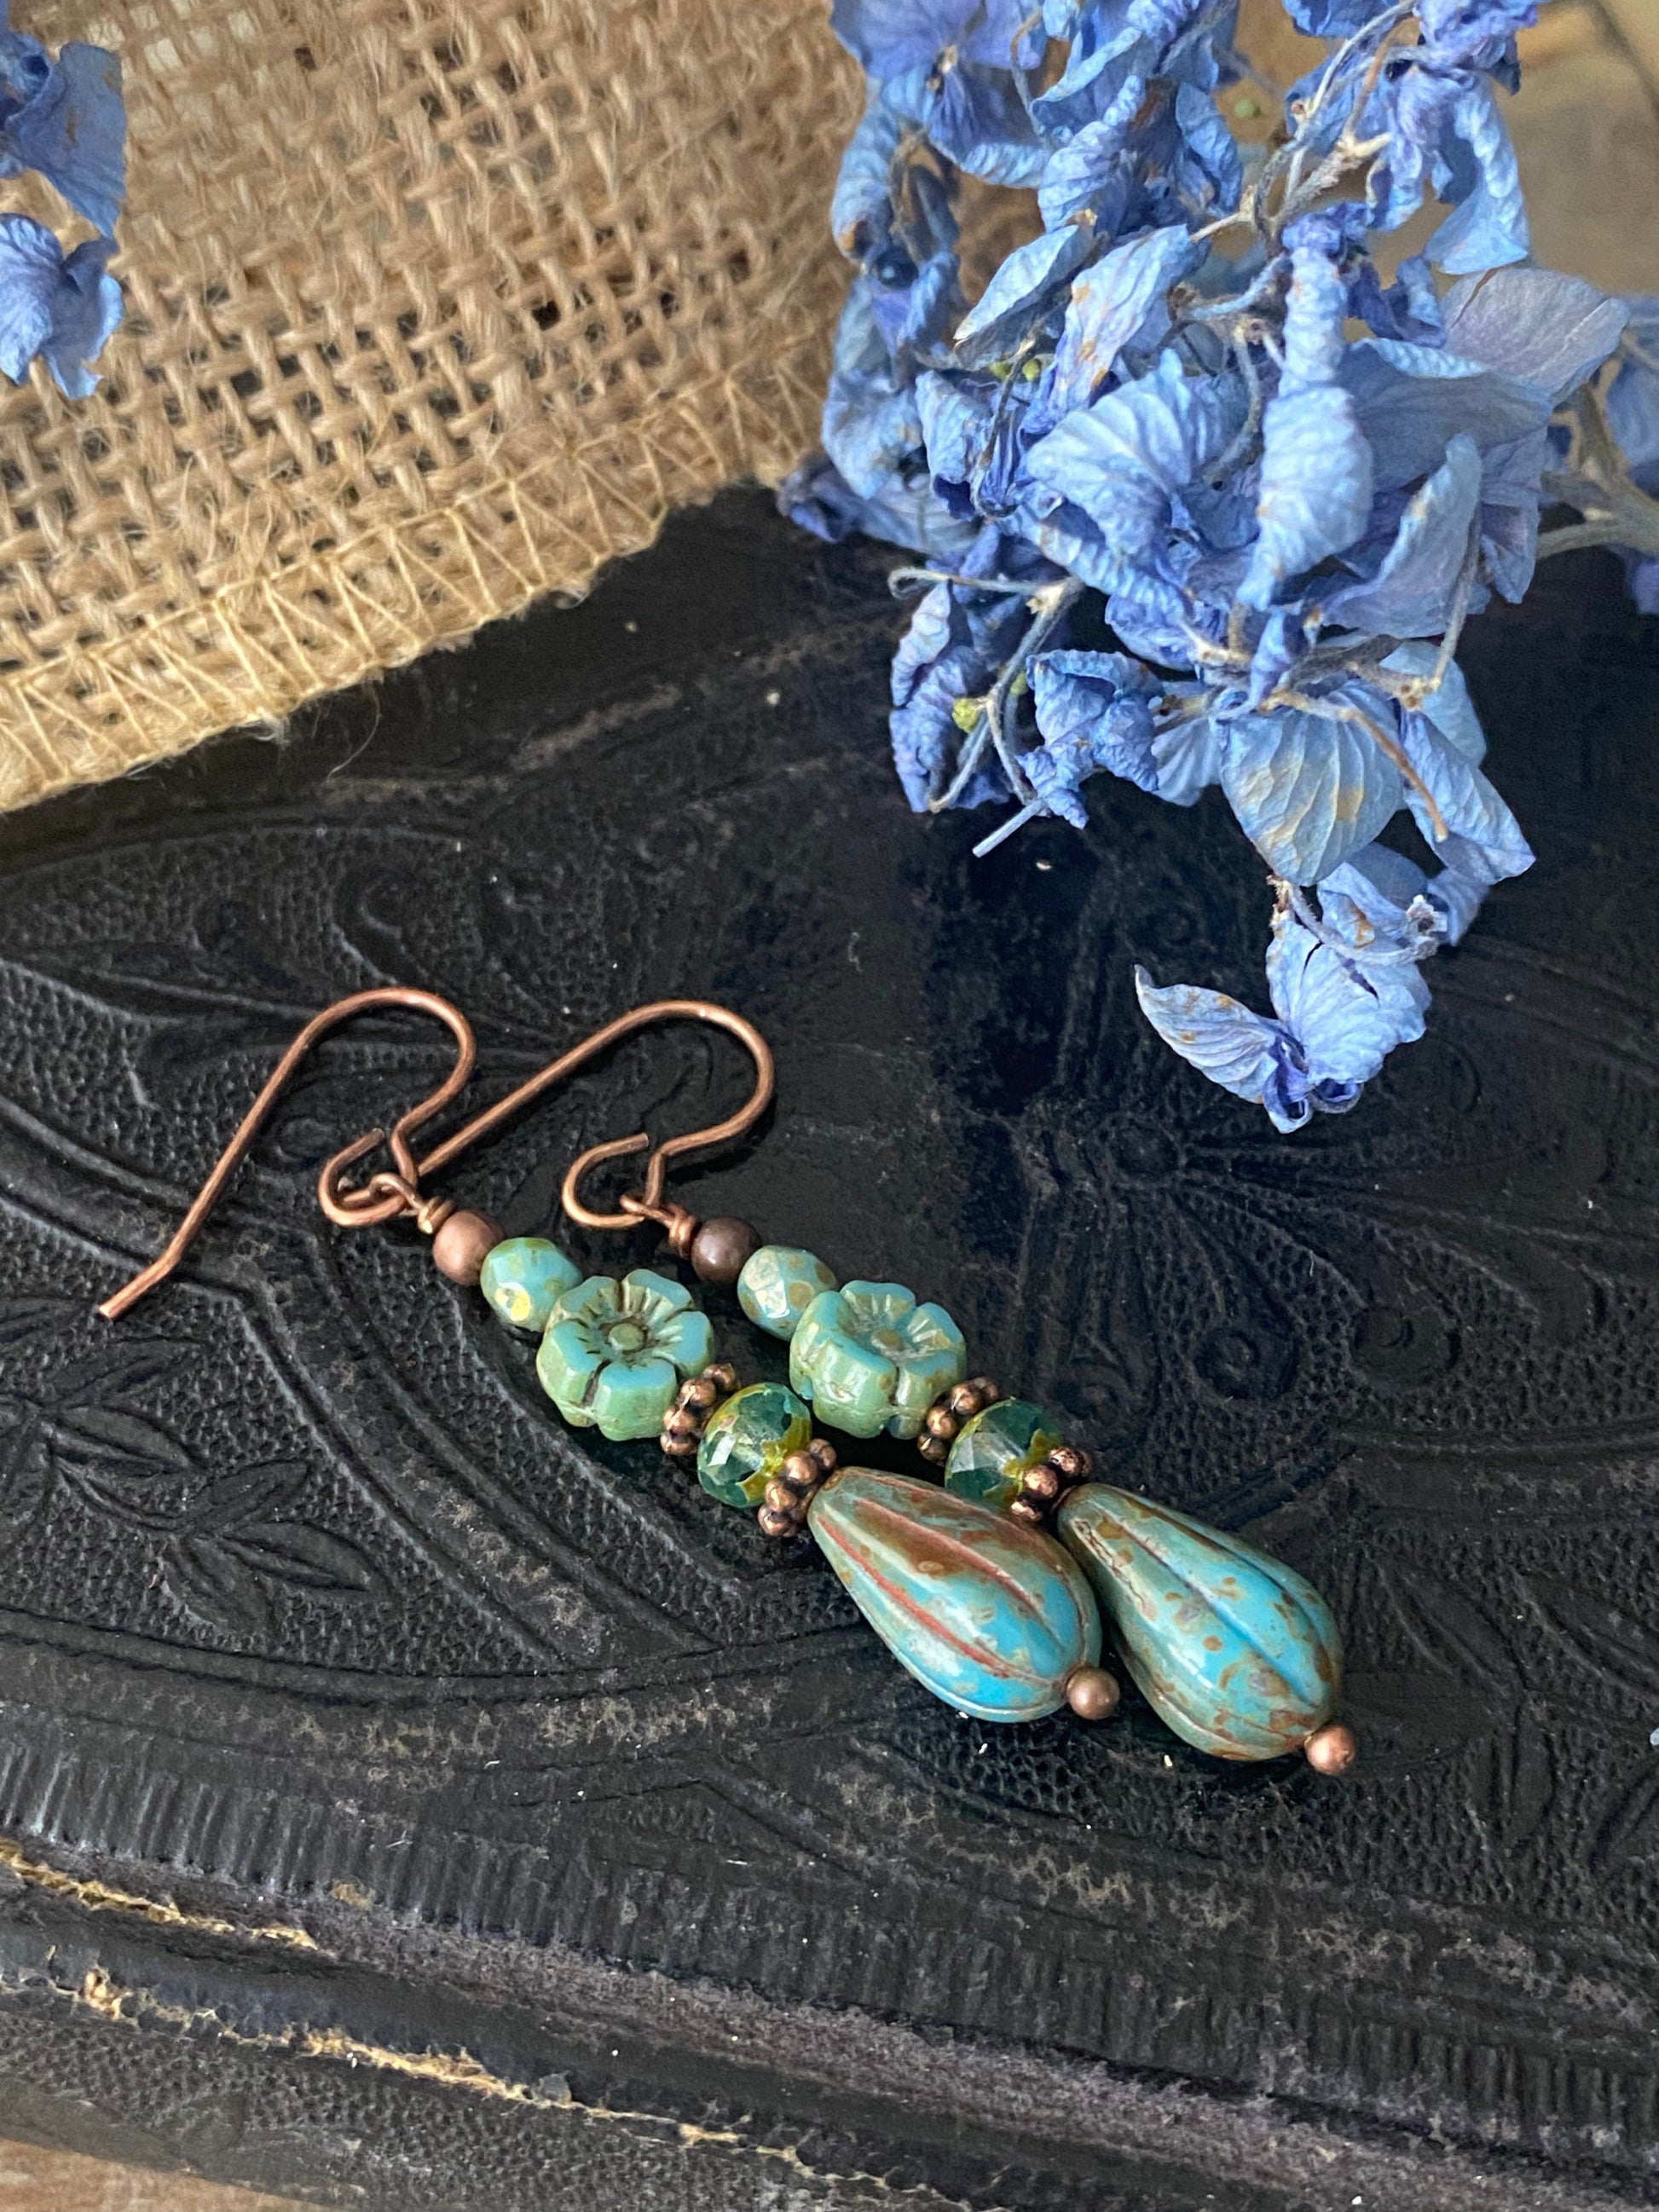 Blue floral Czech glass, copper metal, earrings - Andria Bieber Designs 